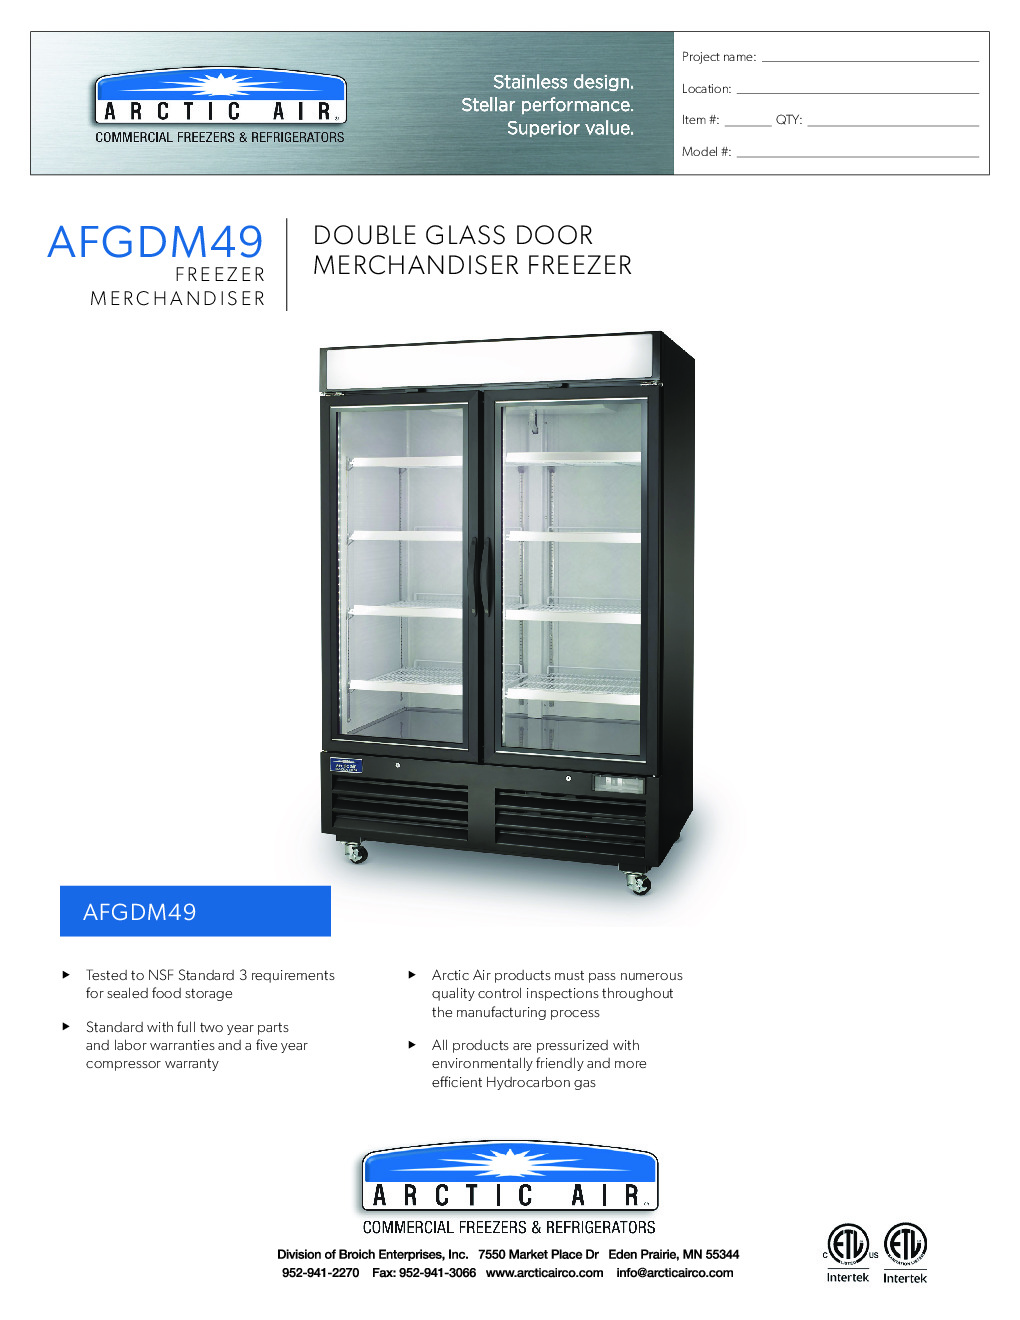 Arctic Air AFGDM49 Merchandiser Freezer